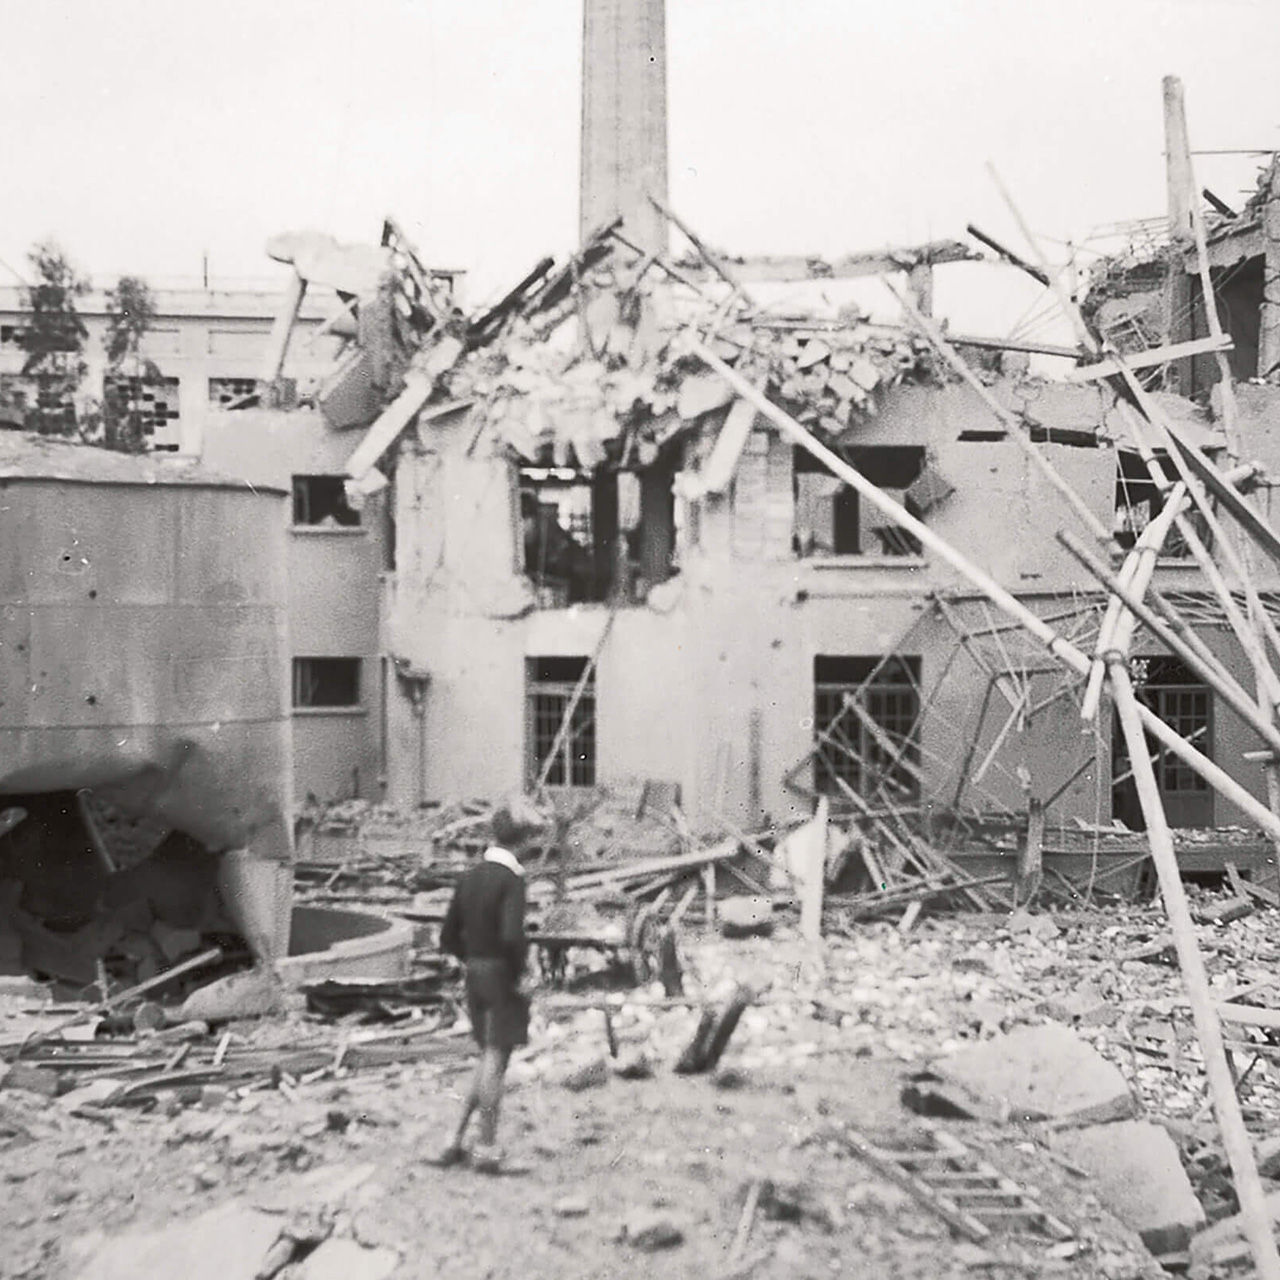 Olio Carli headquarters bombed 